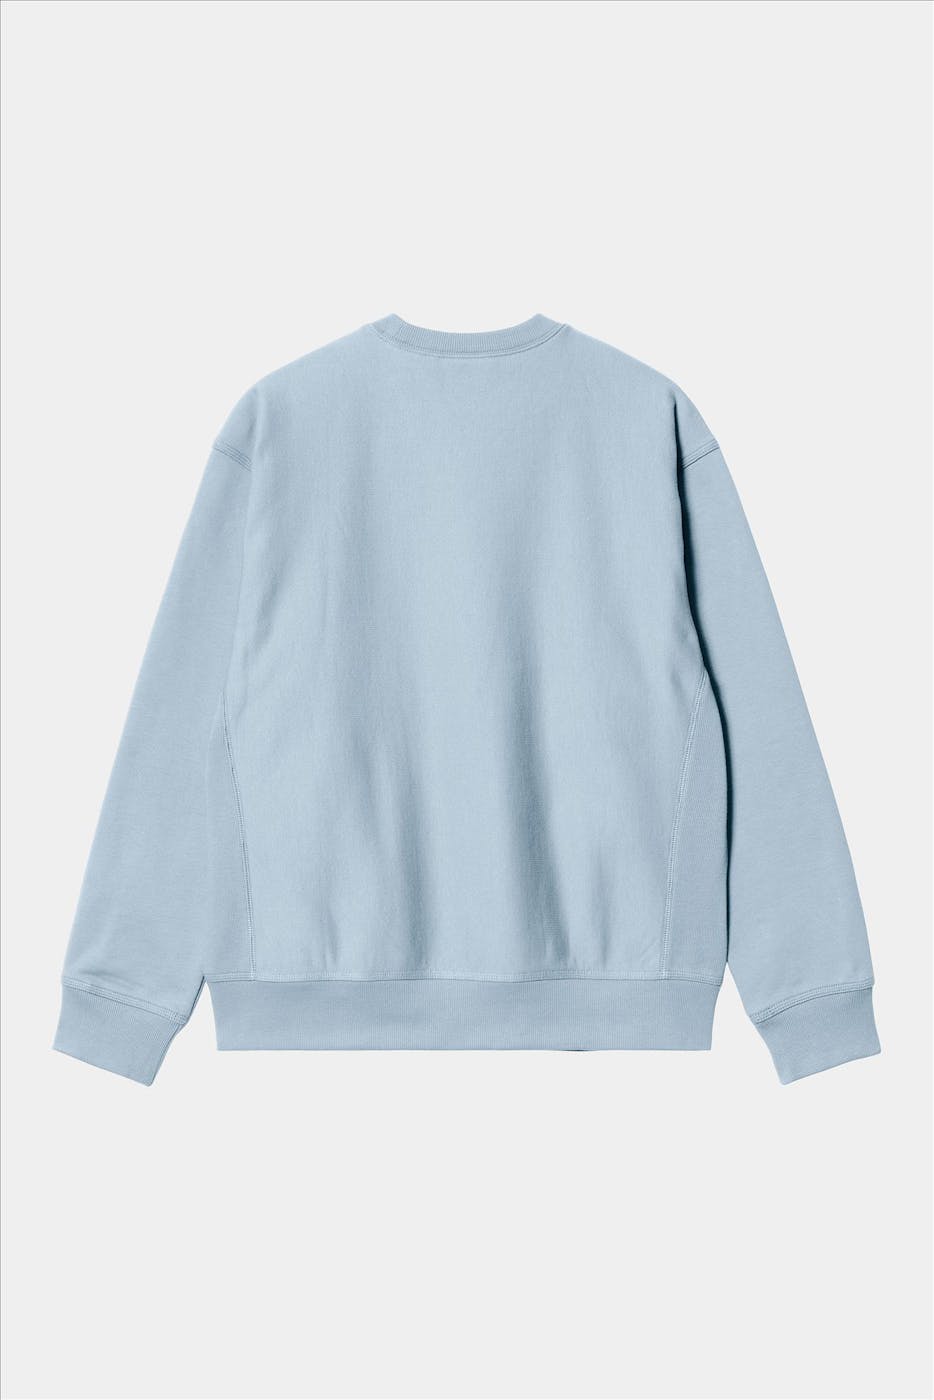 Carhartt WIP - Lichtblauwe American Script sweater